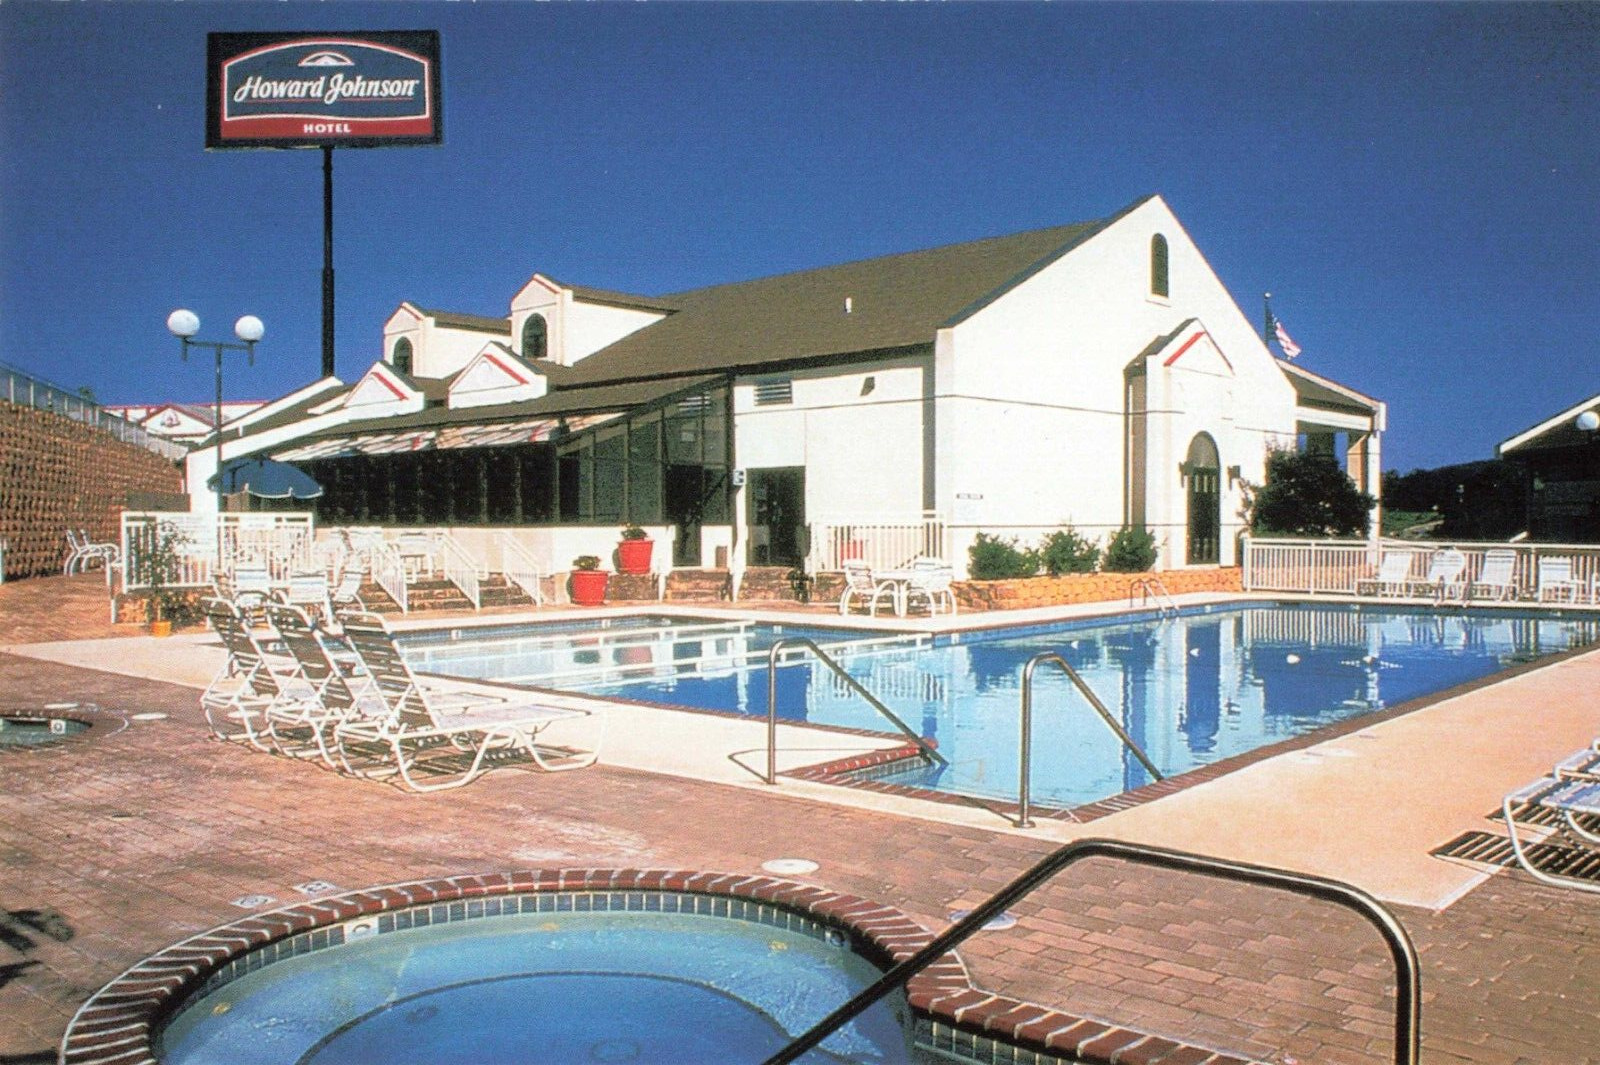 Branson MO Missouri, Howard Johnson Hotel Pool Hot Tub Advert, Vintage Postcard